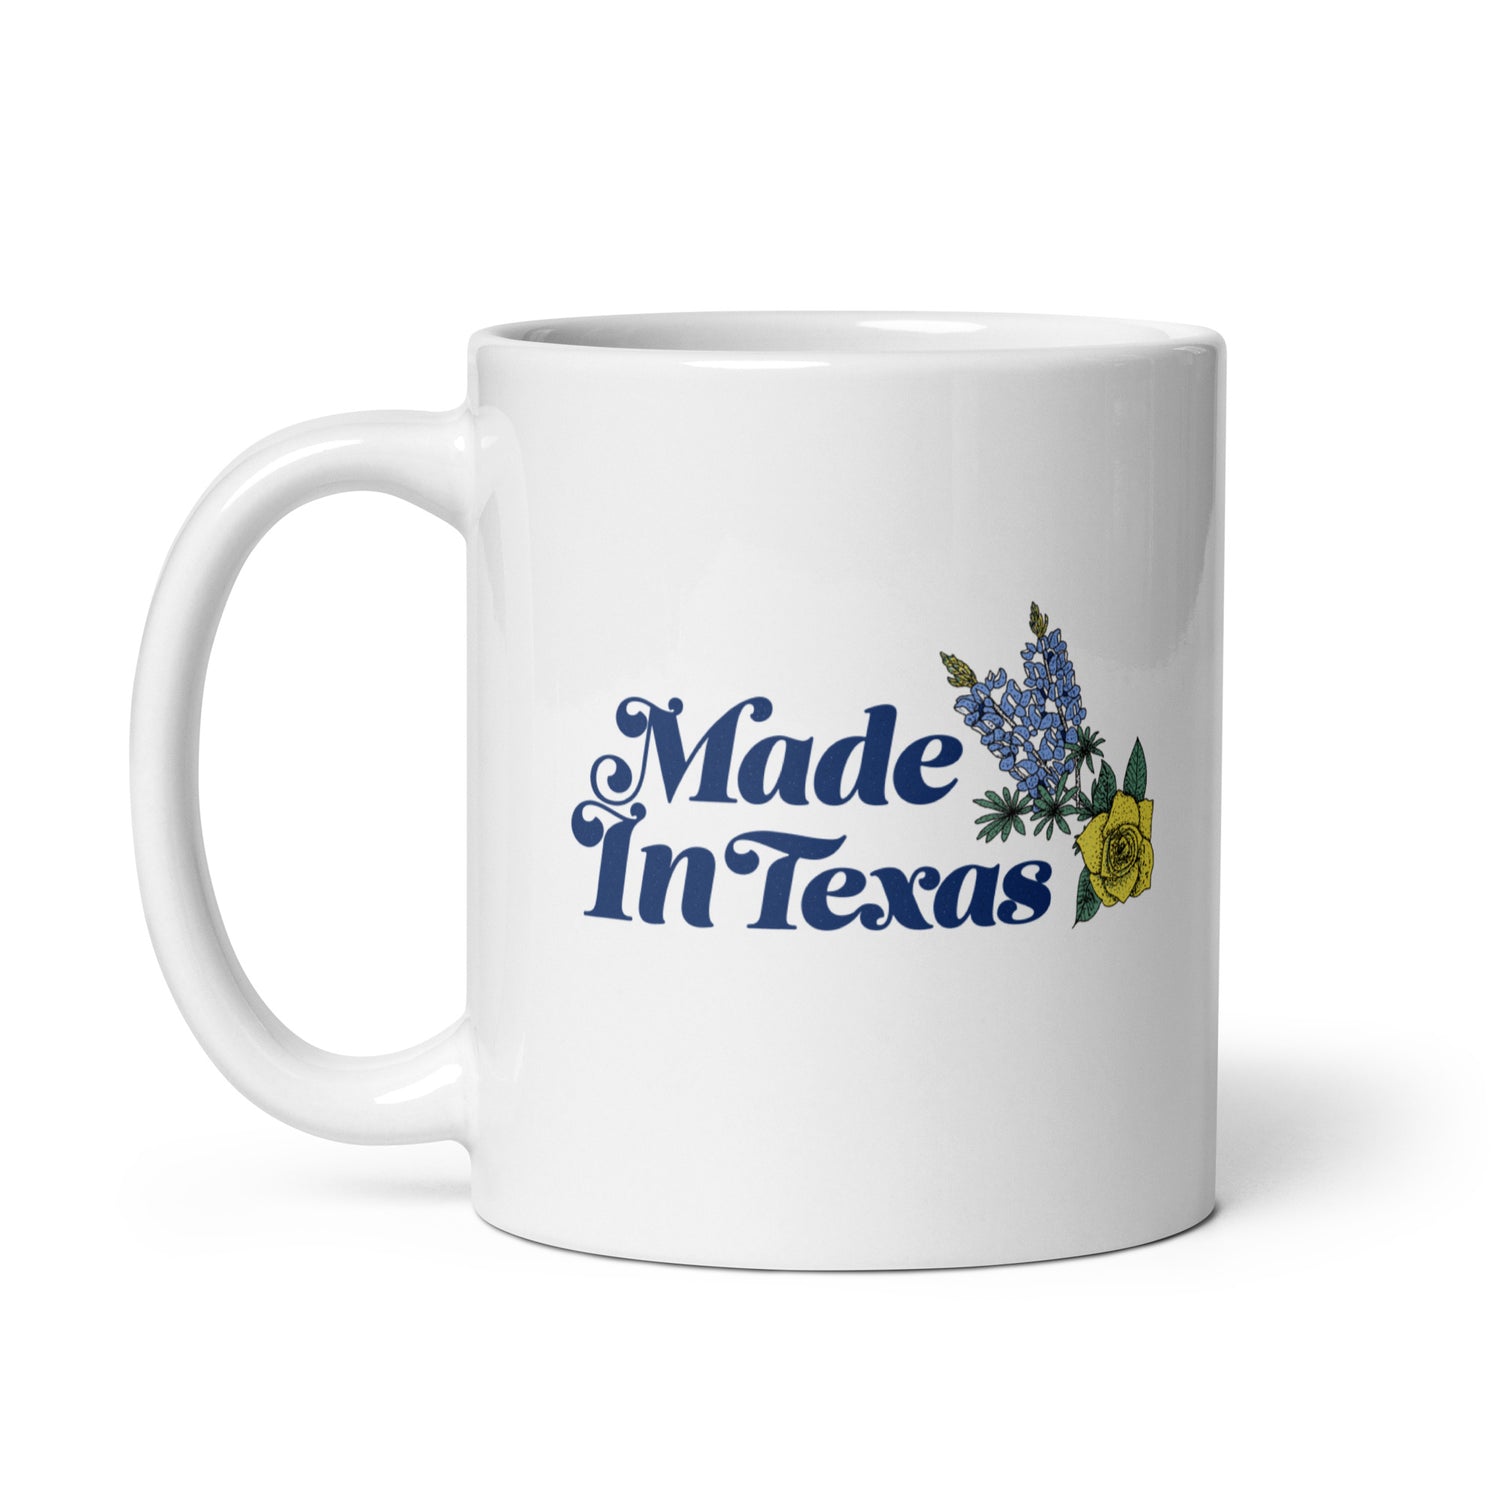 Made in Texas Mug